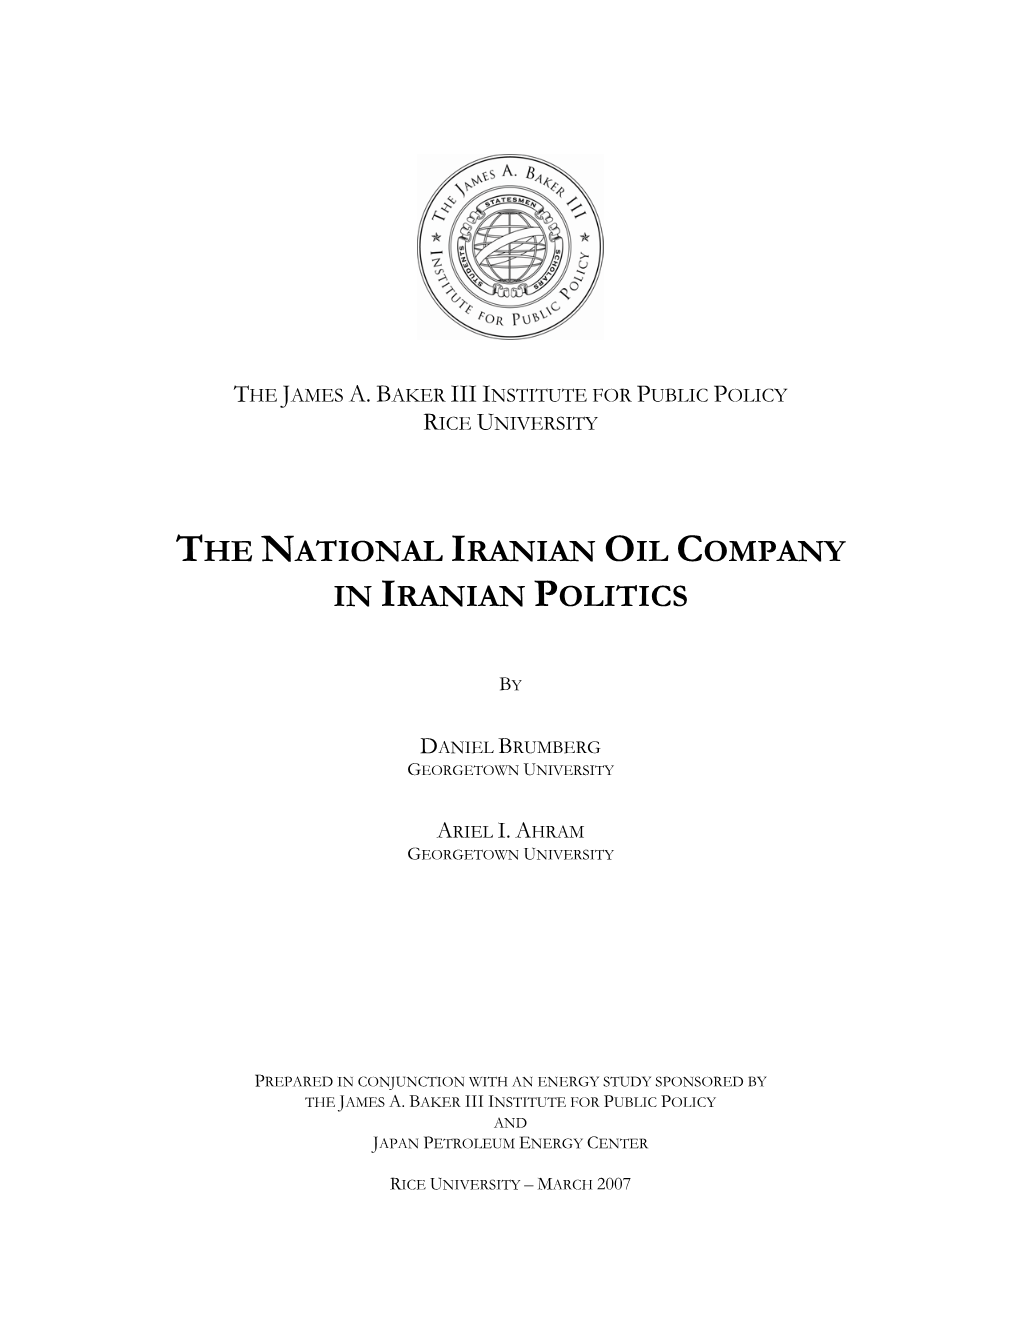 The National Iranian Oil Company in Iranian Politics